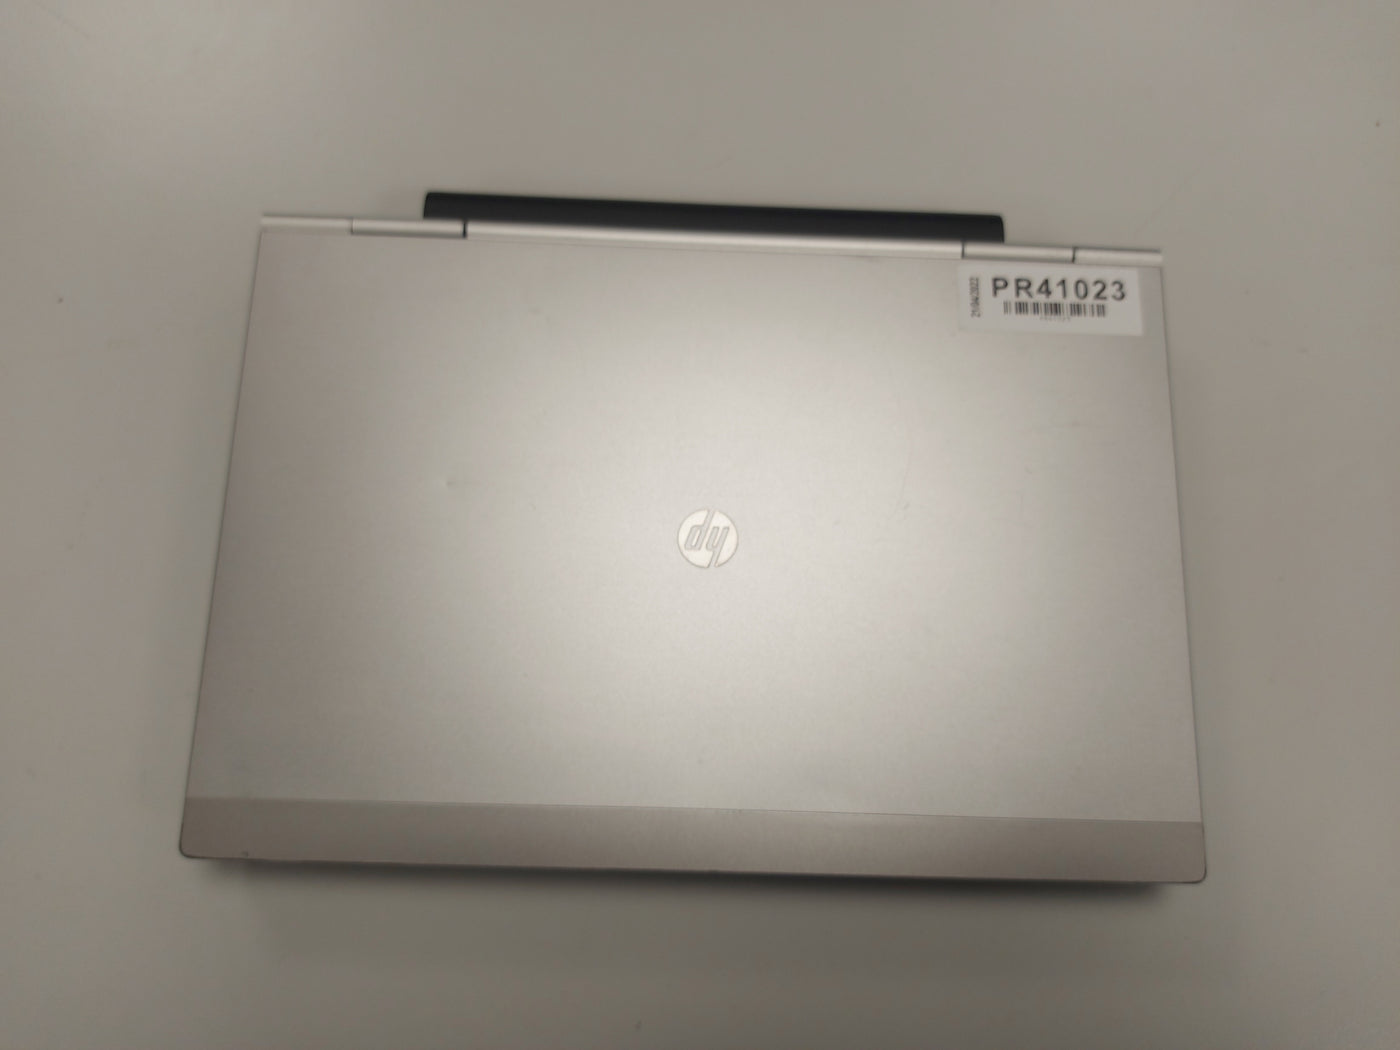 HP EliteBook 2570p 320GB HDD Core i5-3230M 2600MHz 4GB RAM 12.5" Laptop ( 2570p ) USED 